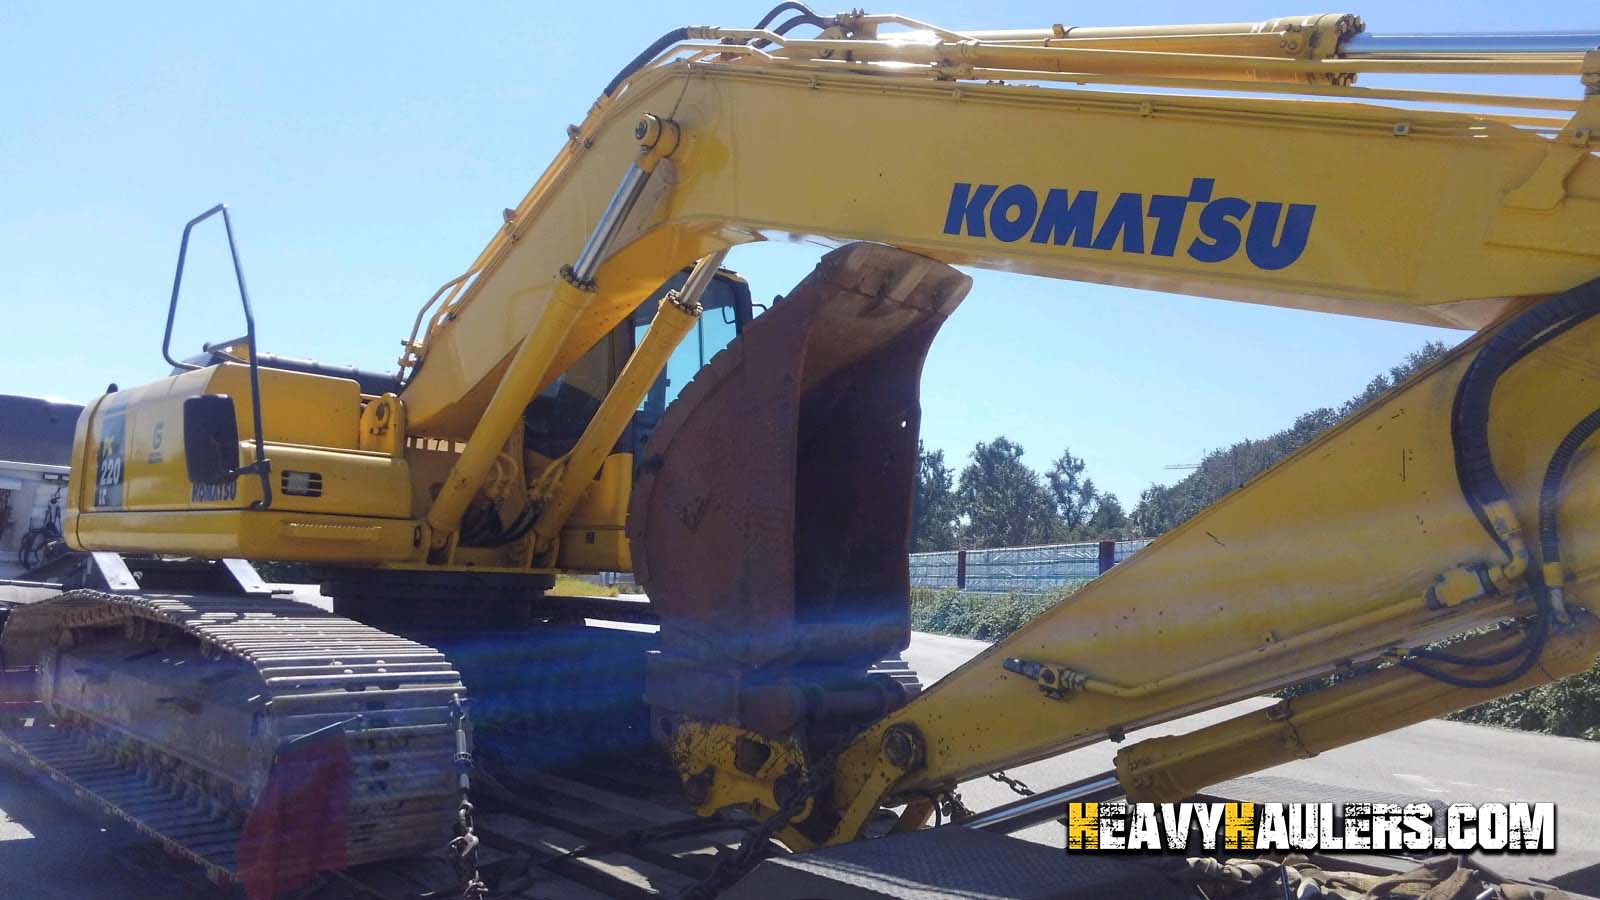 Komatsu Excavator being transported from Denver, CO